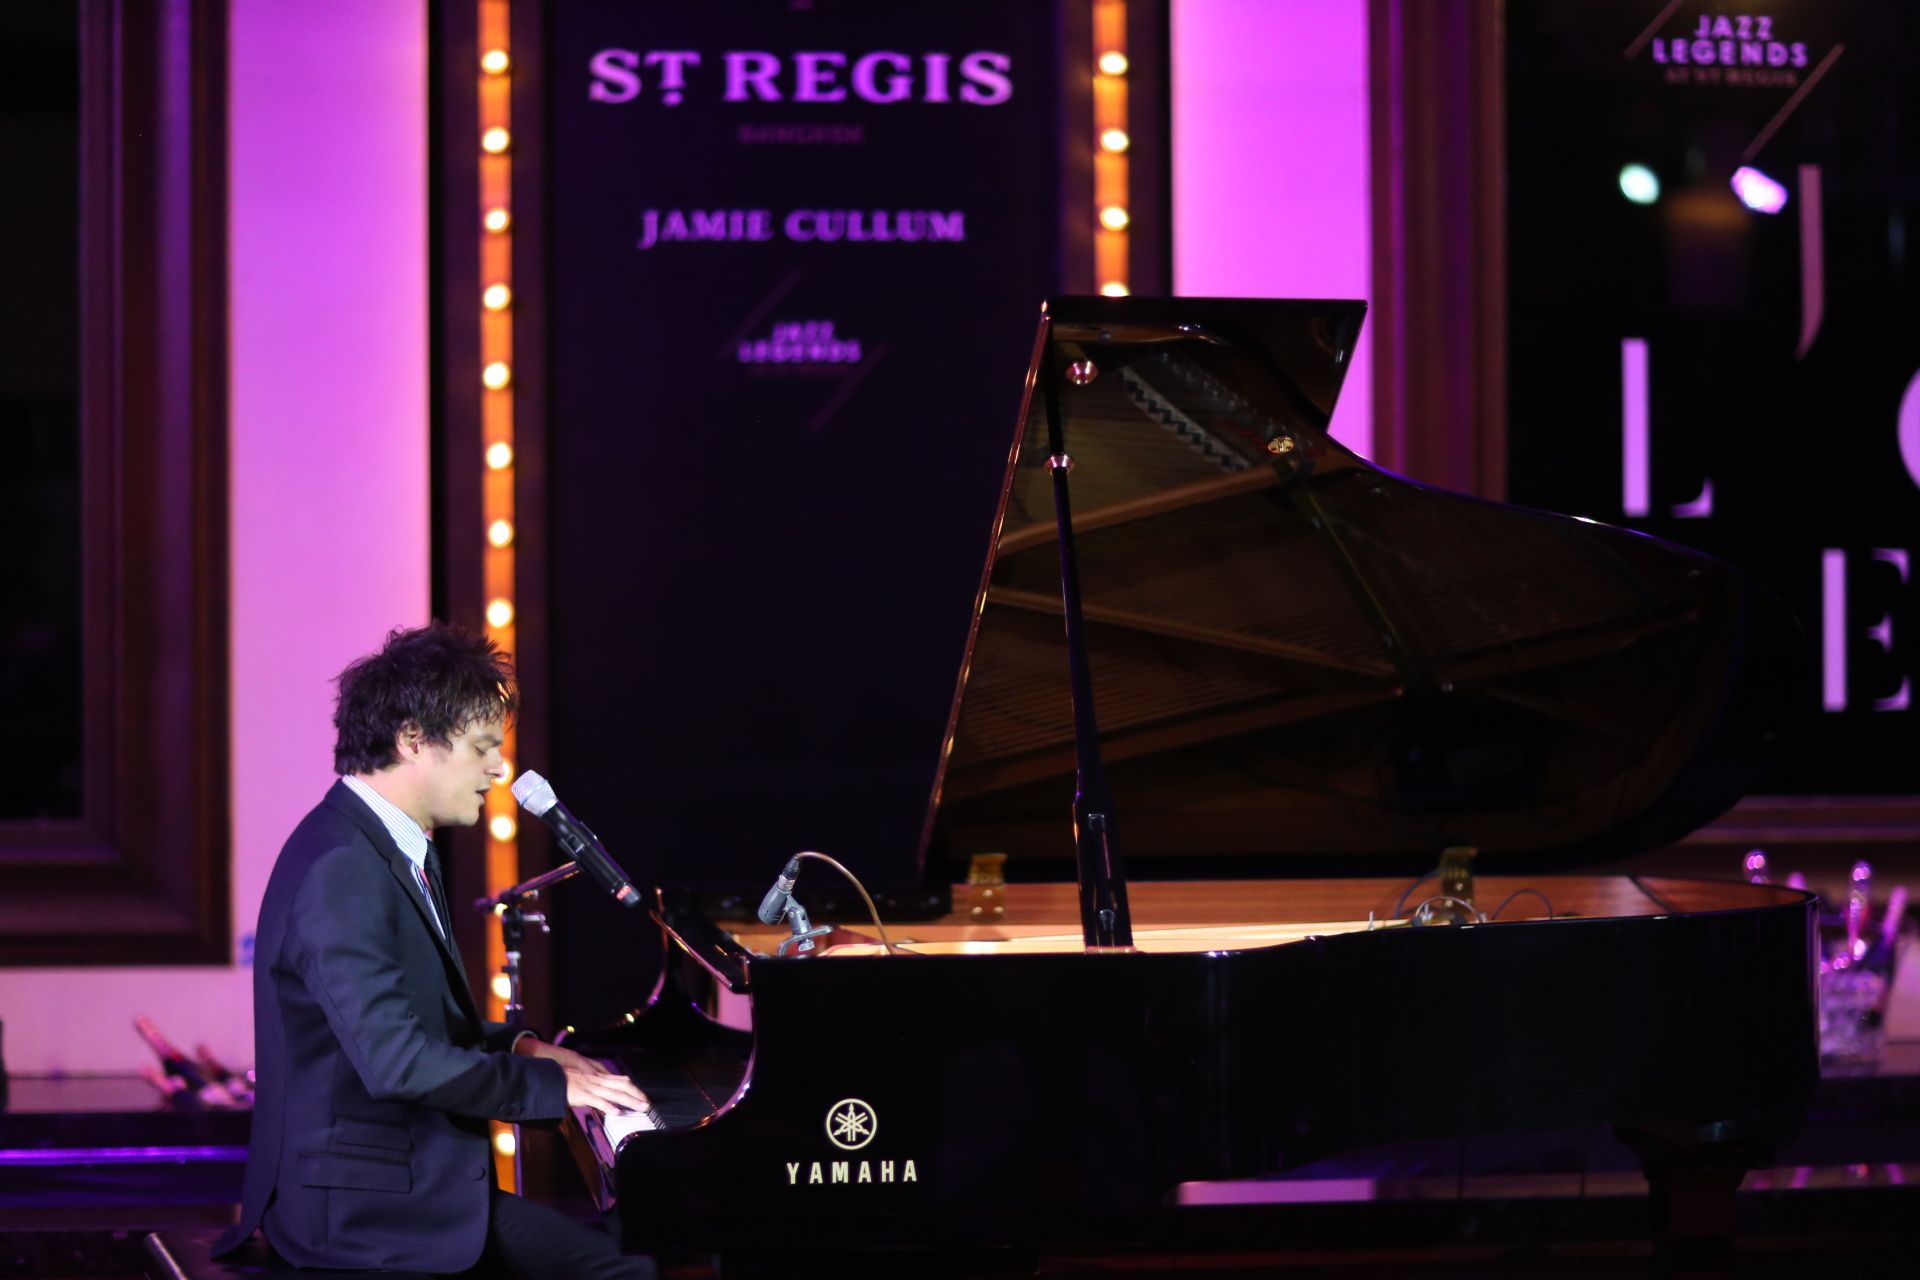 Jamie Callum perform at Jazz Legends at St. Regis in Bangkok